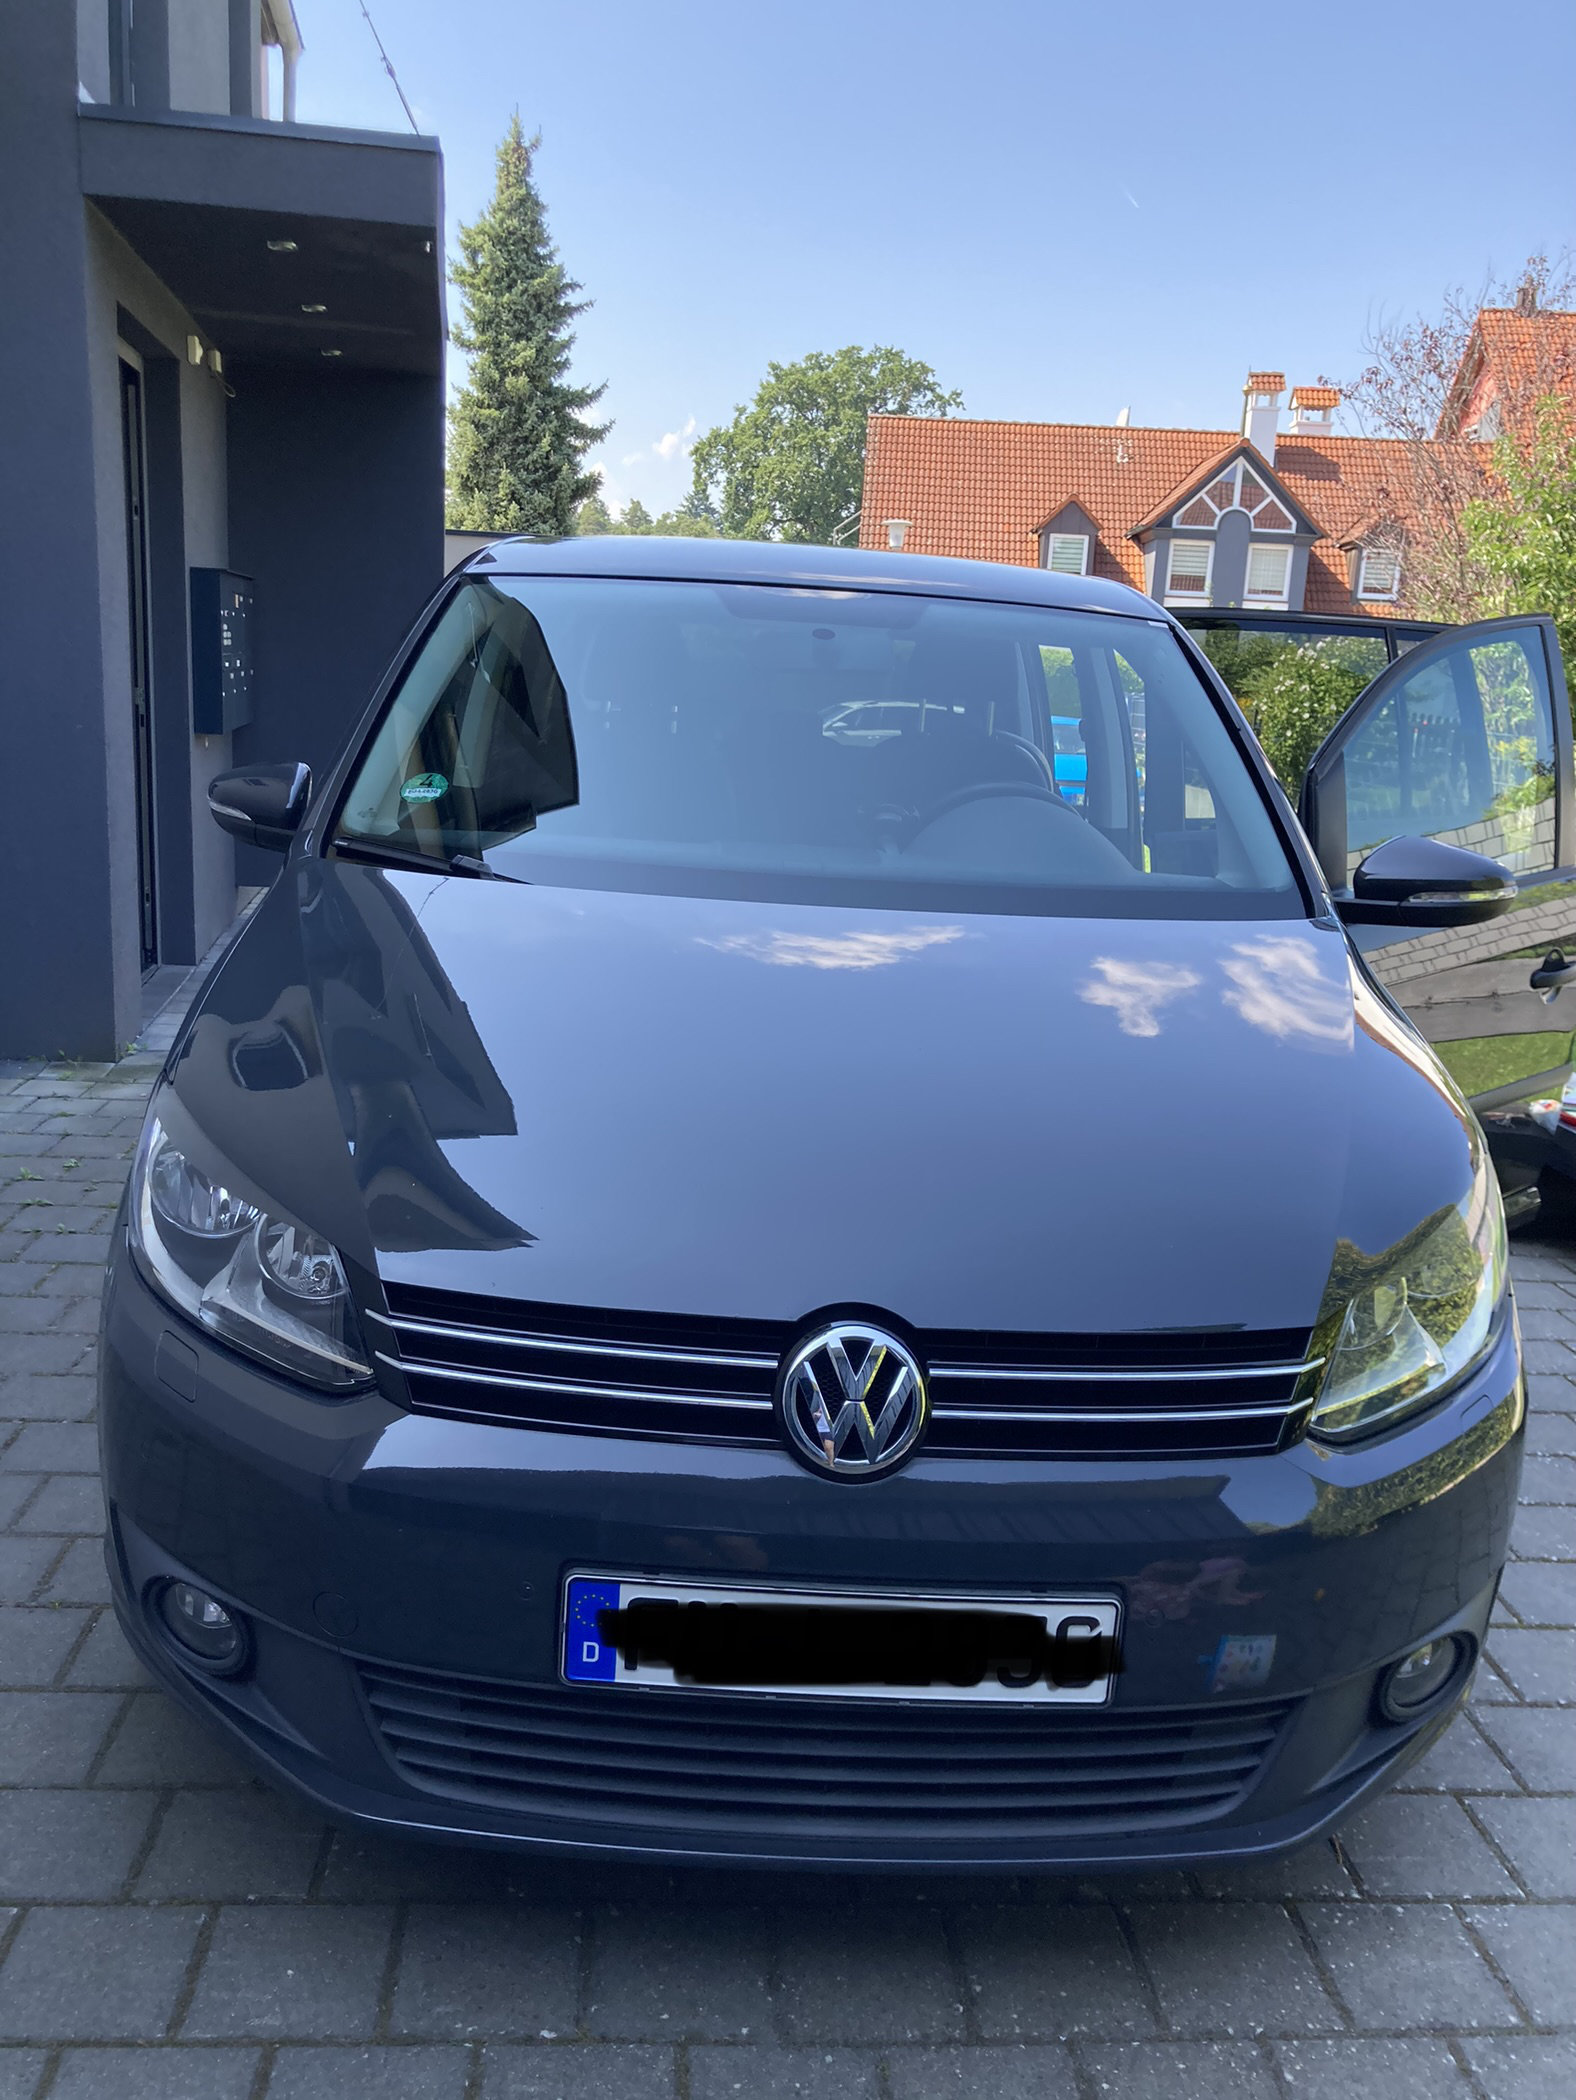 VW Touran in Schwarz